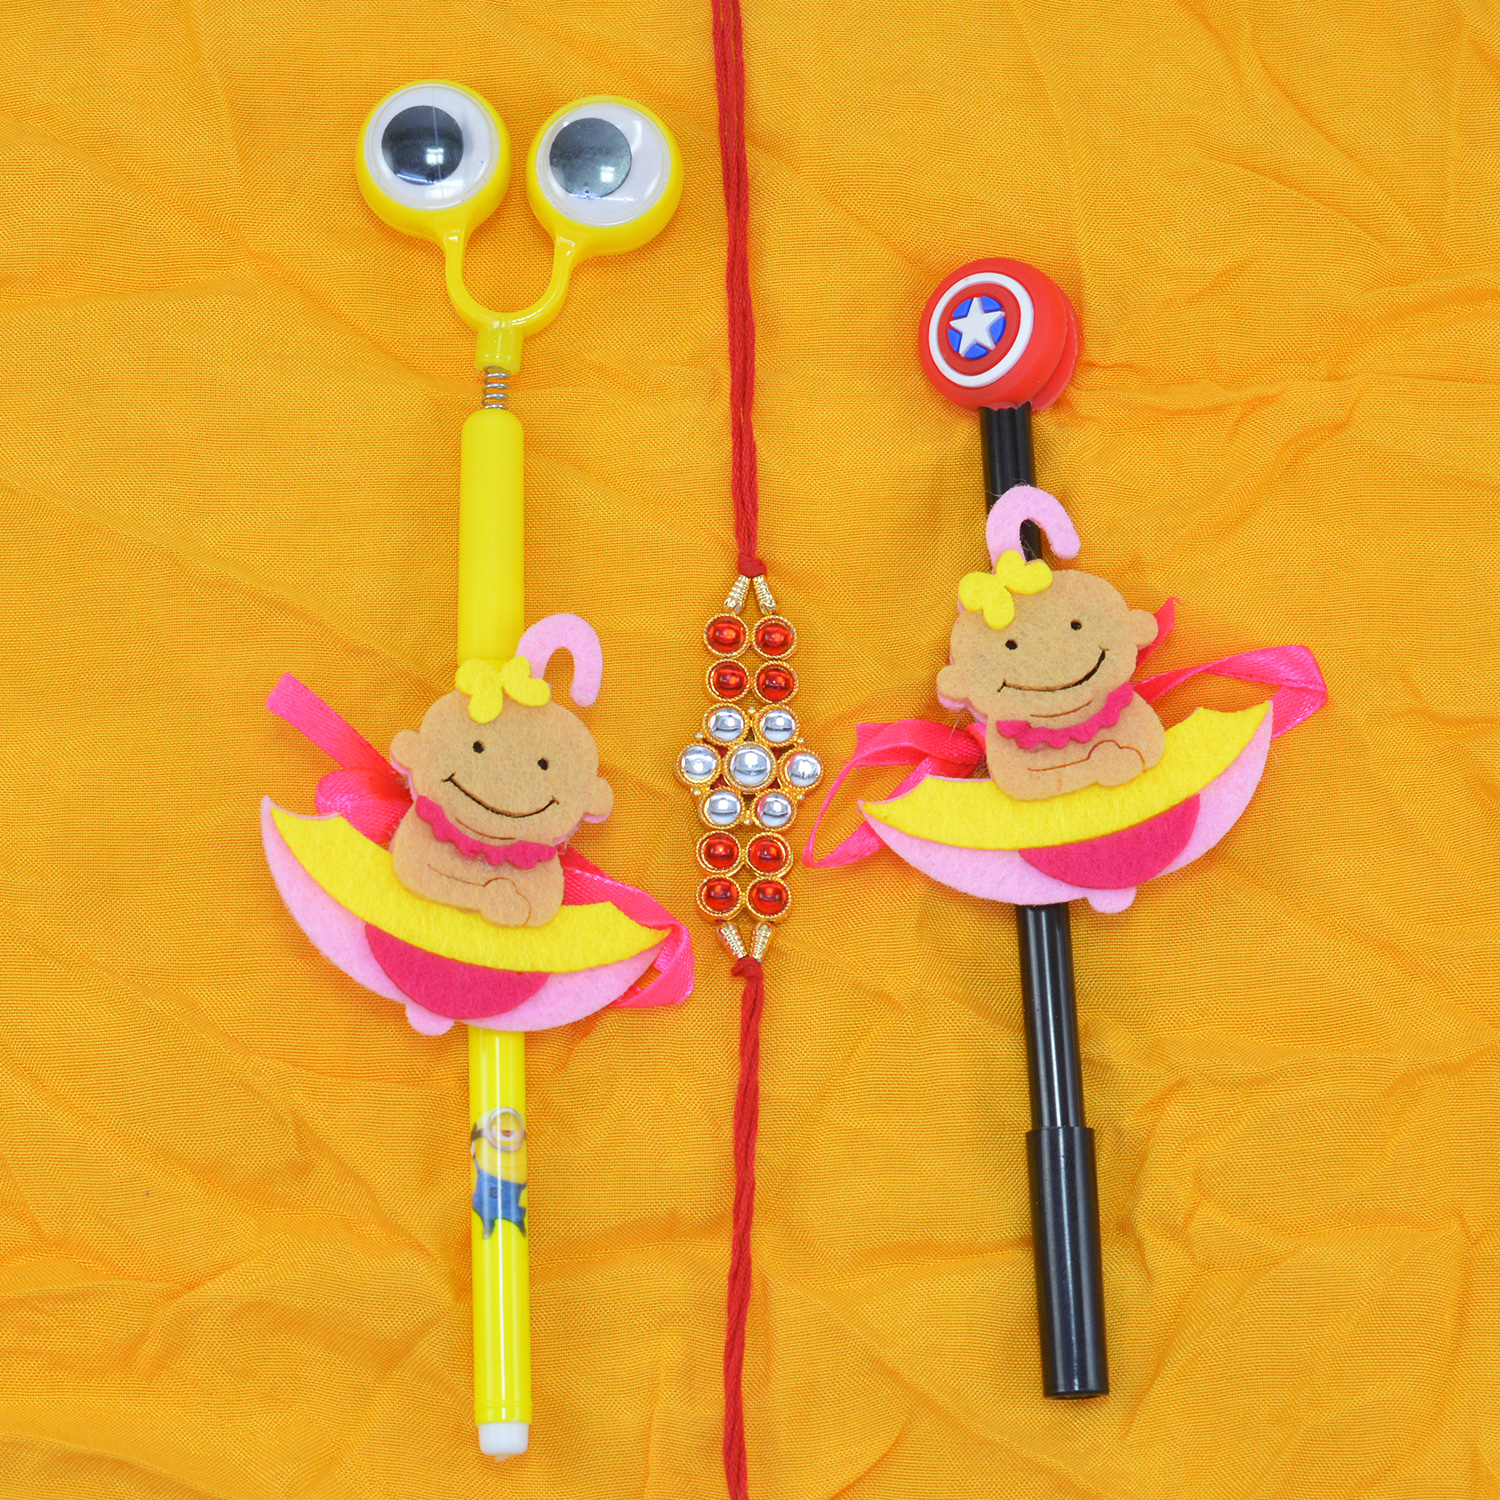 Small Happy Kids with Toy 2 Kids Rakhi and Single Jewel Studded Brother Rakhi Set of 3